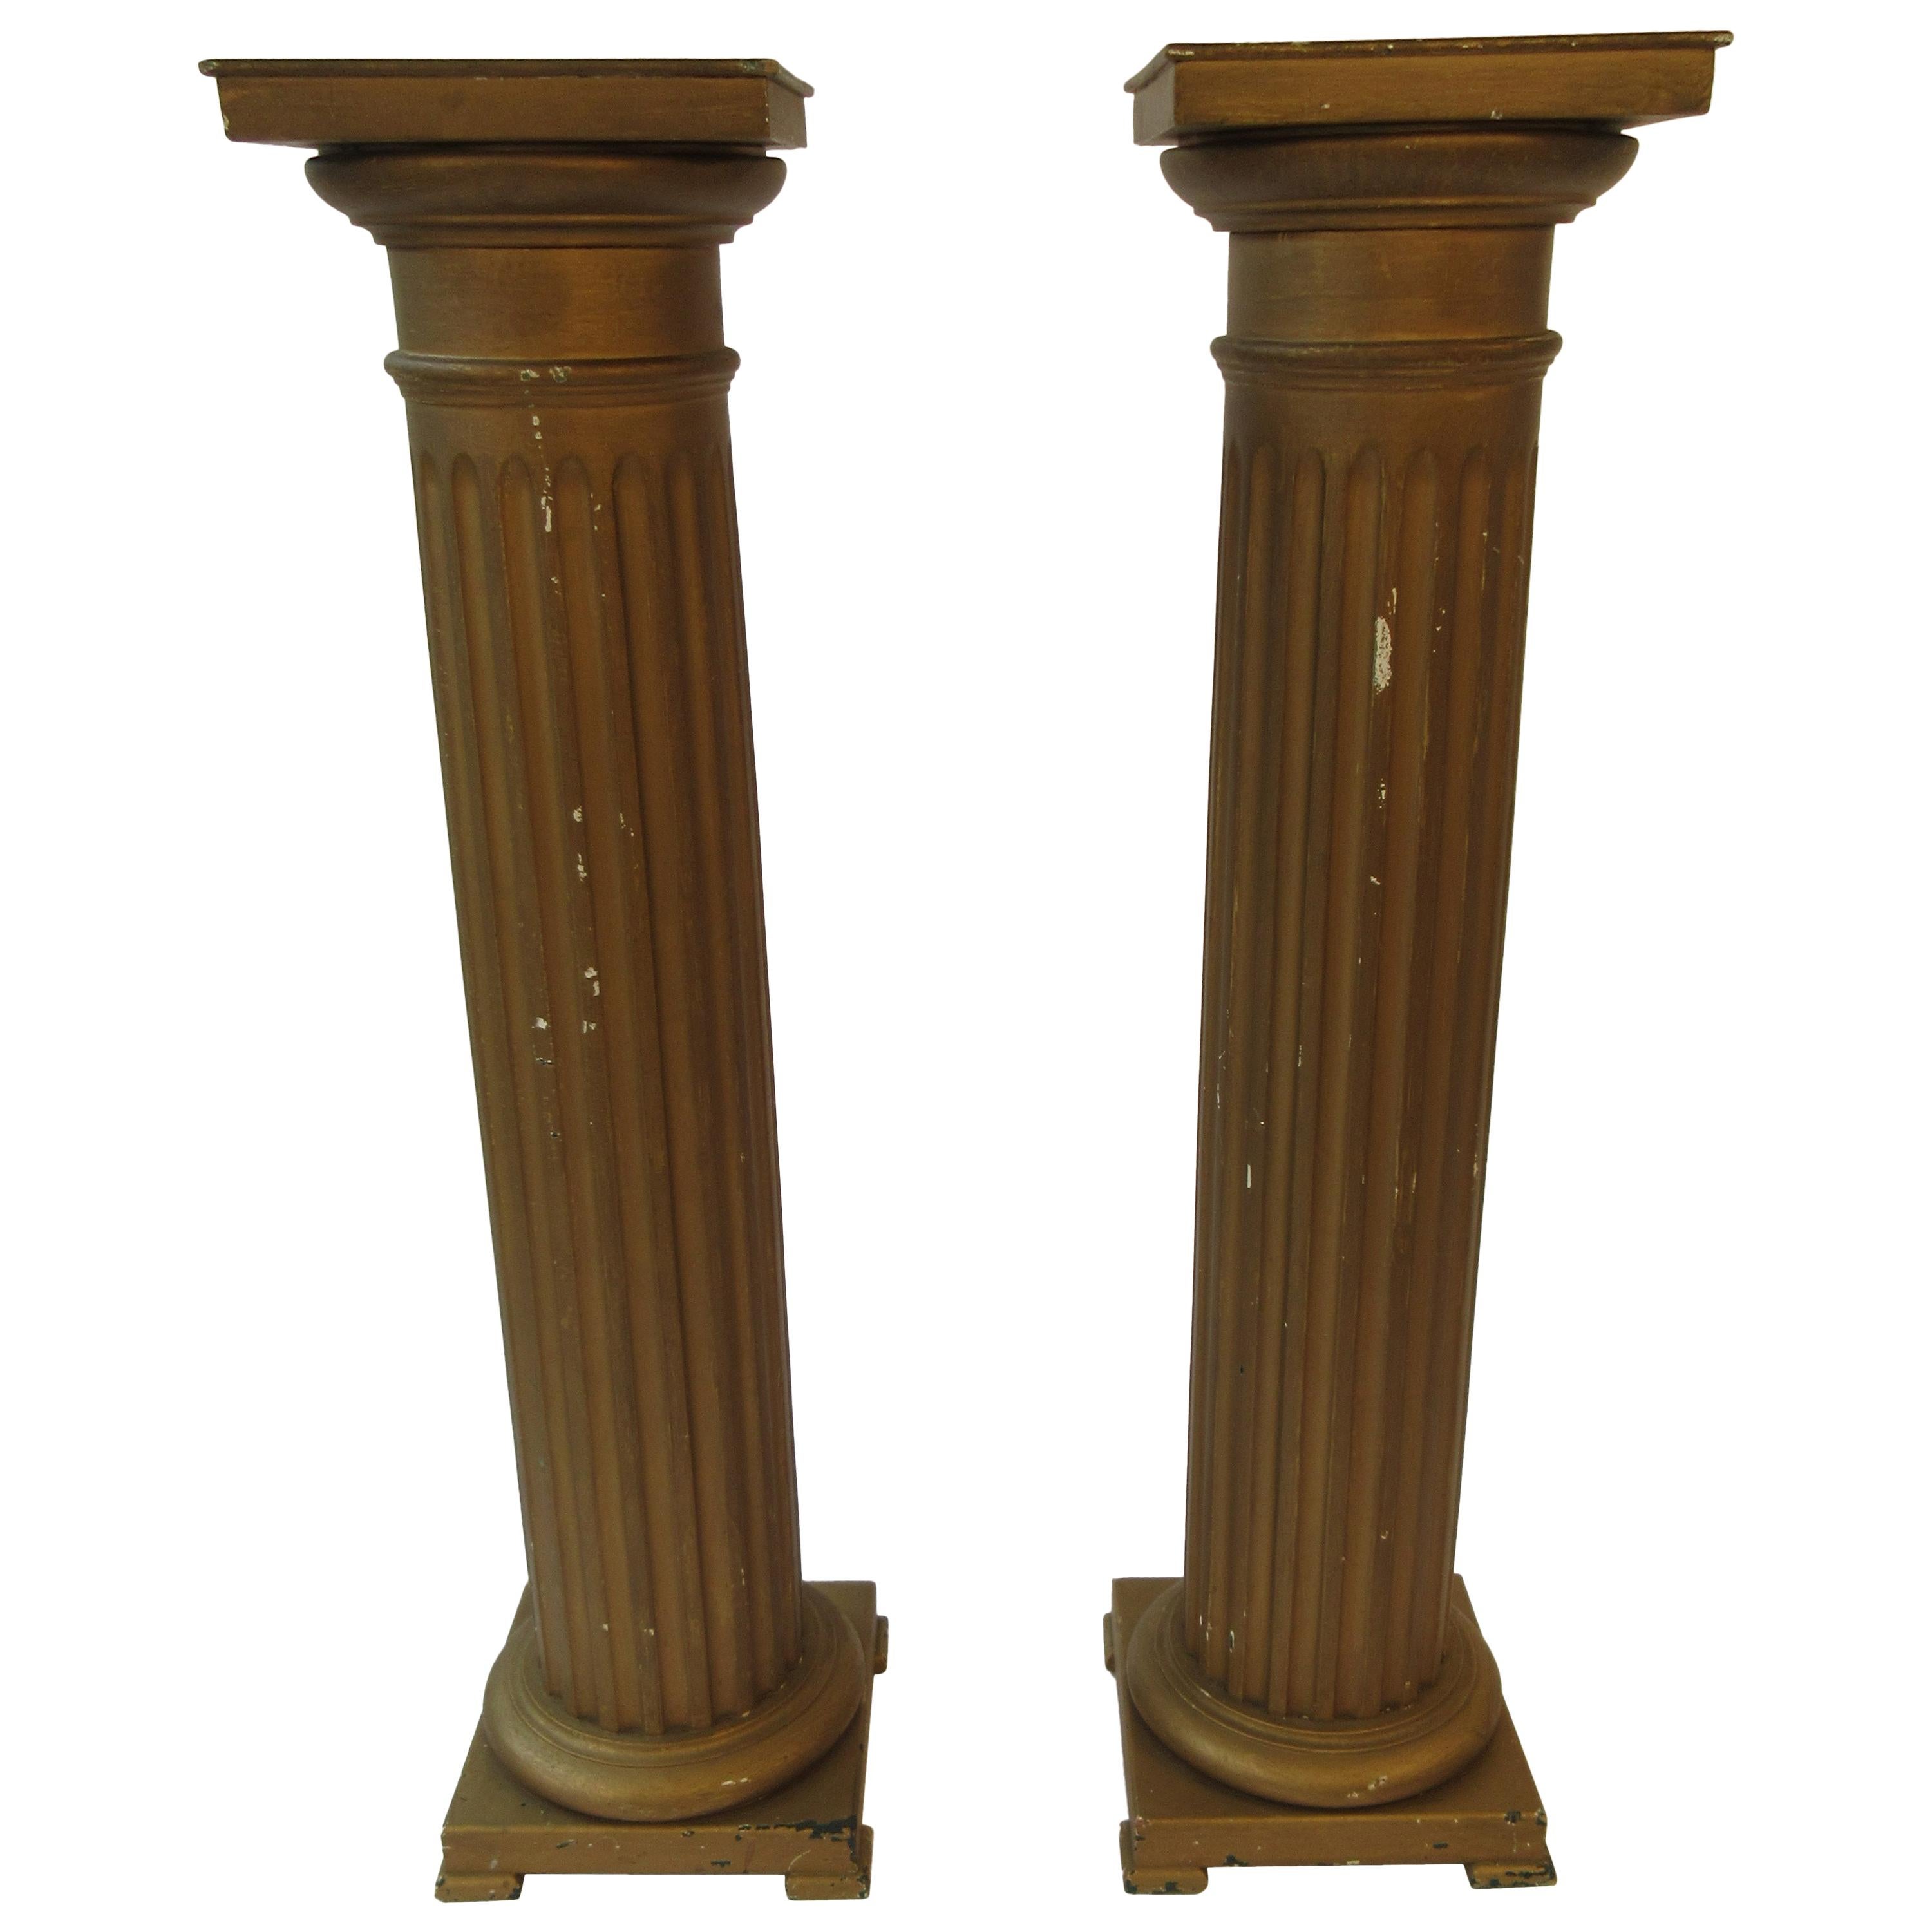 Pair of Wood Column Pedestals